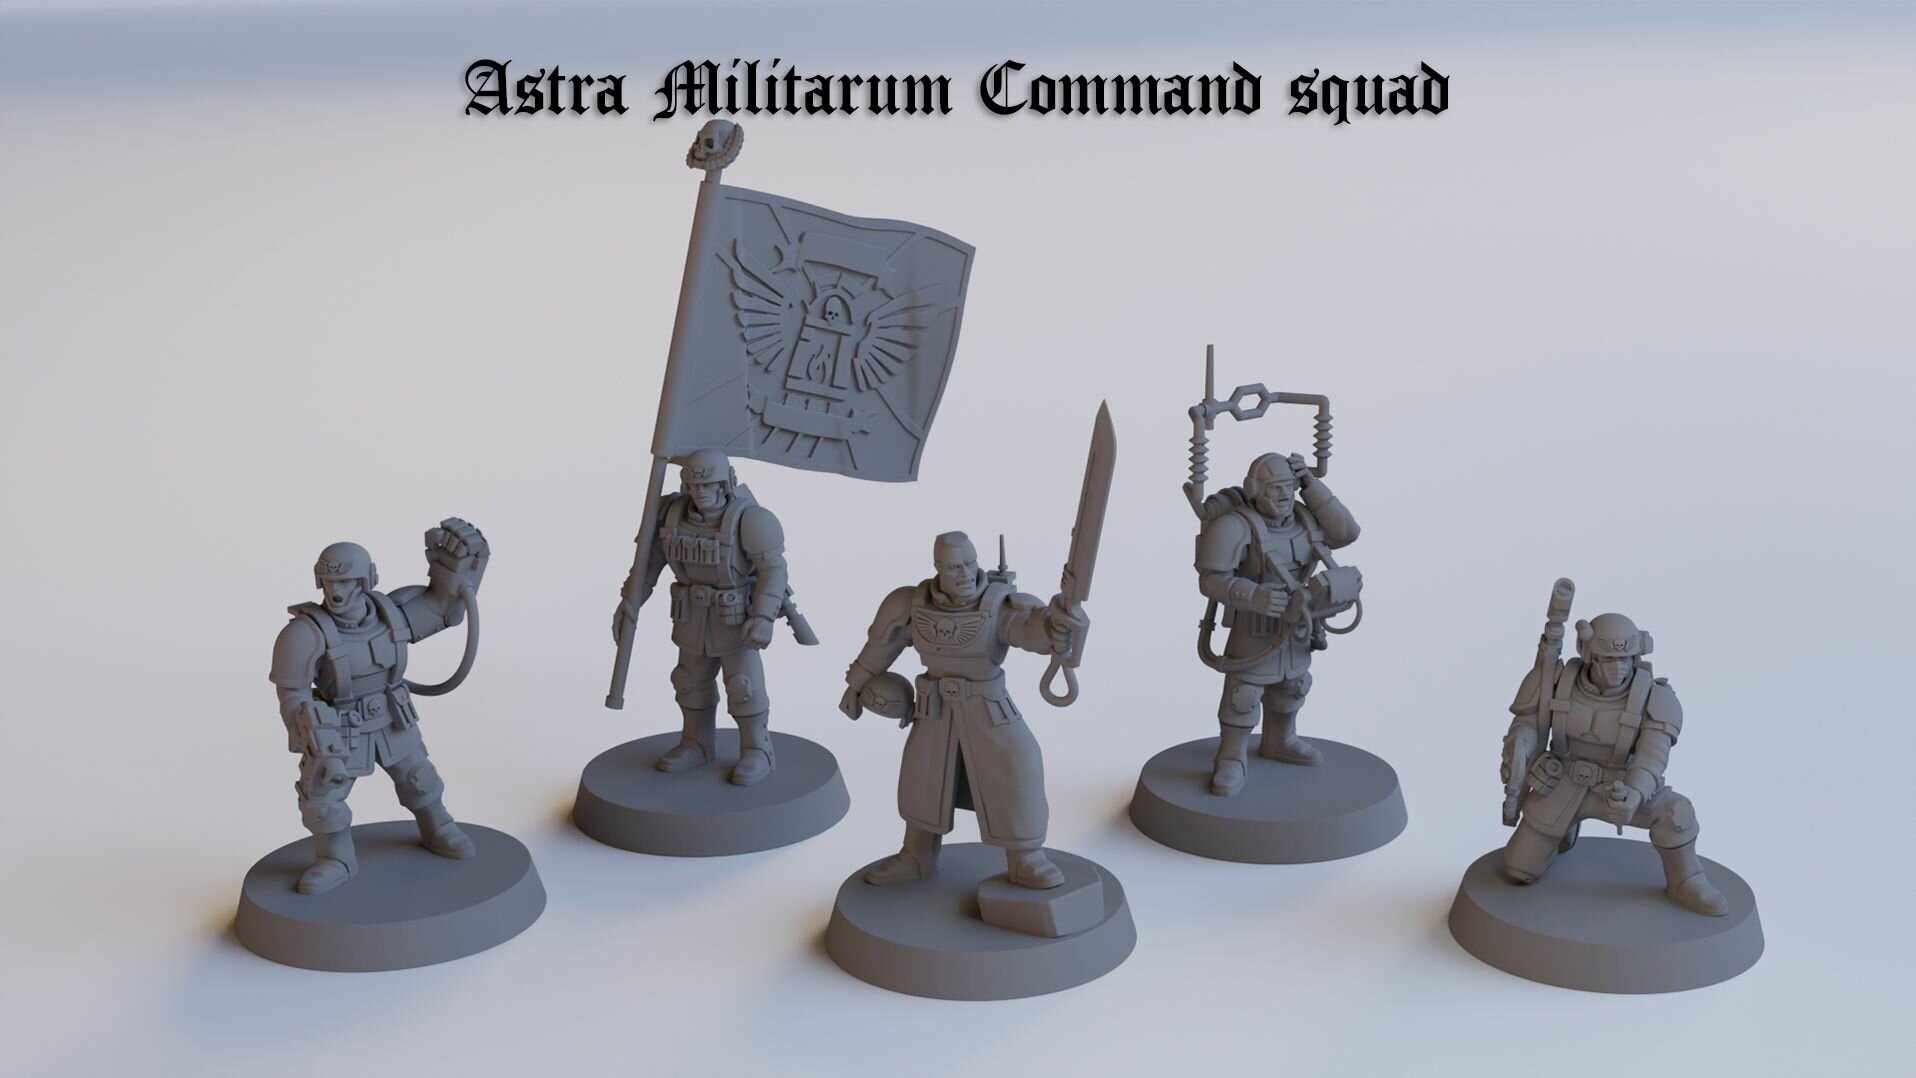 Astra Militarum: Cadian Command Squad / Командный отряд Имперской гвардии / набор миниатюр Warhammer 40k Астра Милитарум